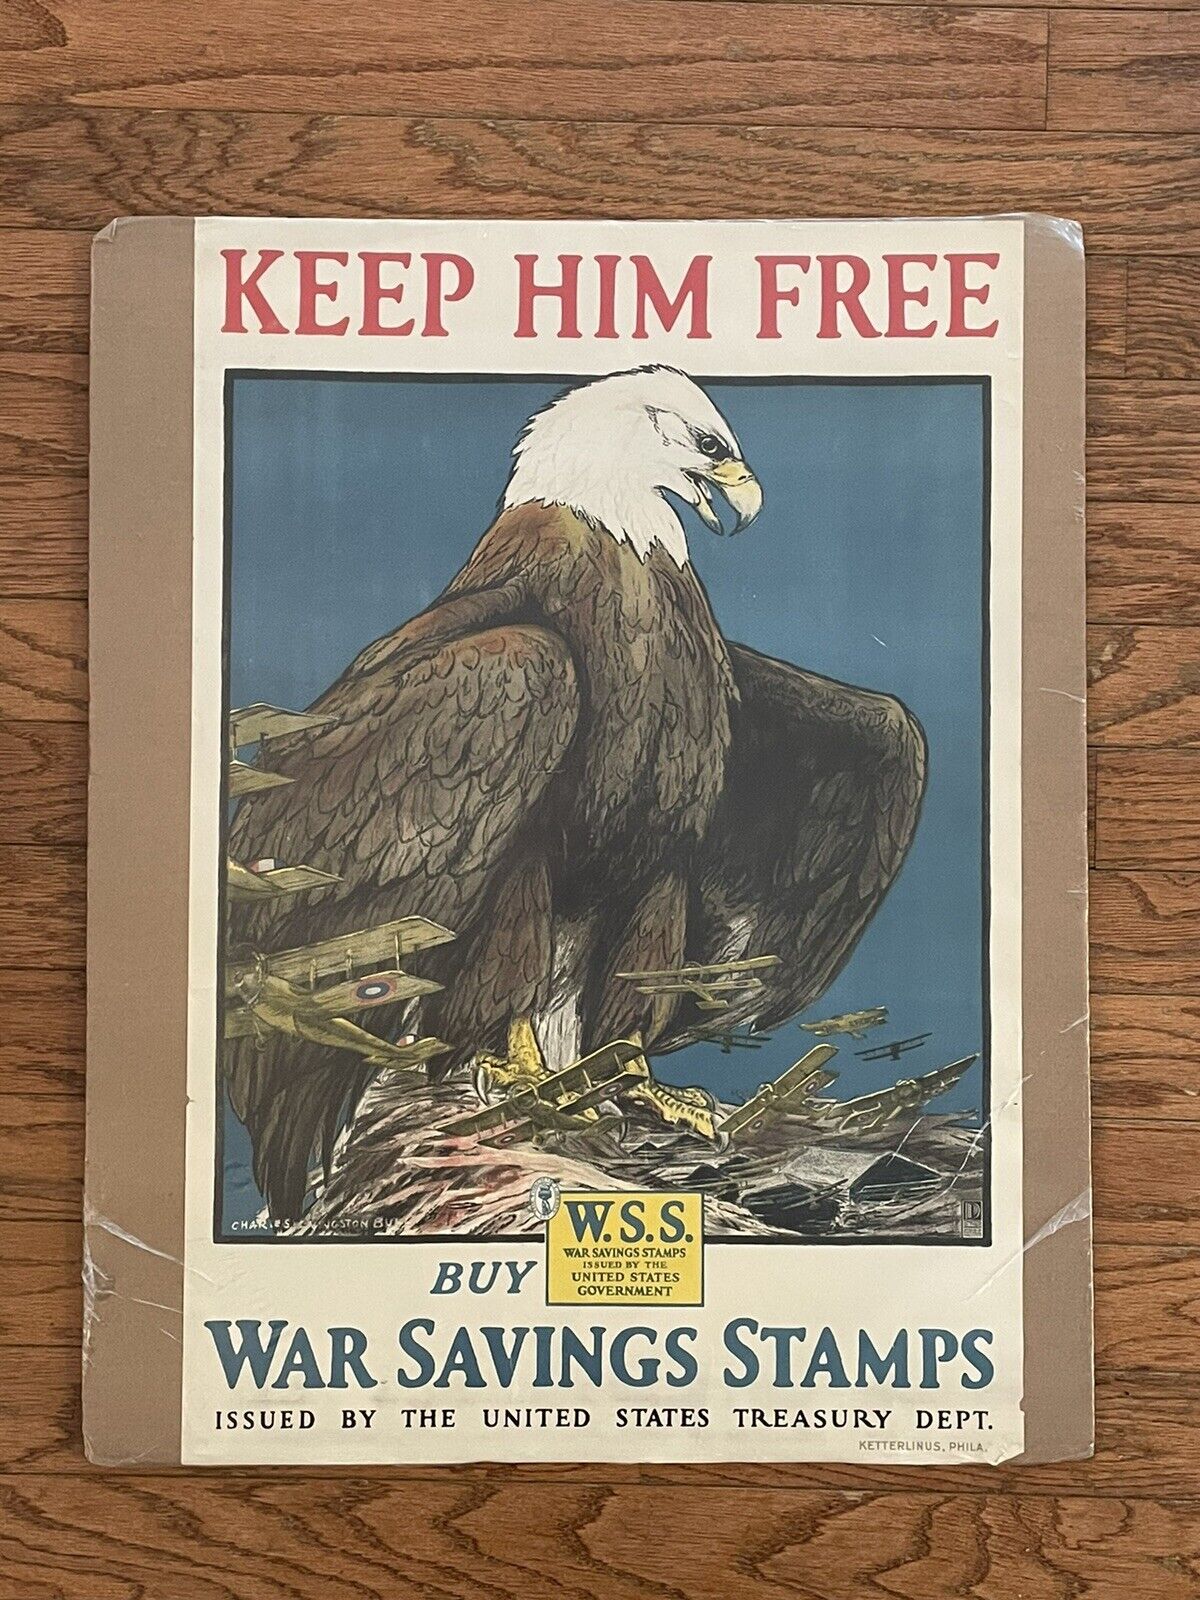 RARE Original WW1 “Keep Him Free” War Savings Stamps Full Size Poster 20x30”